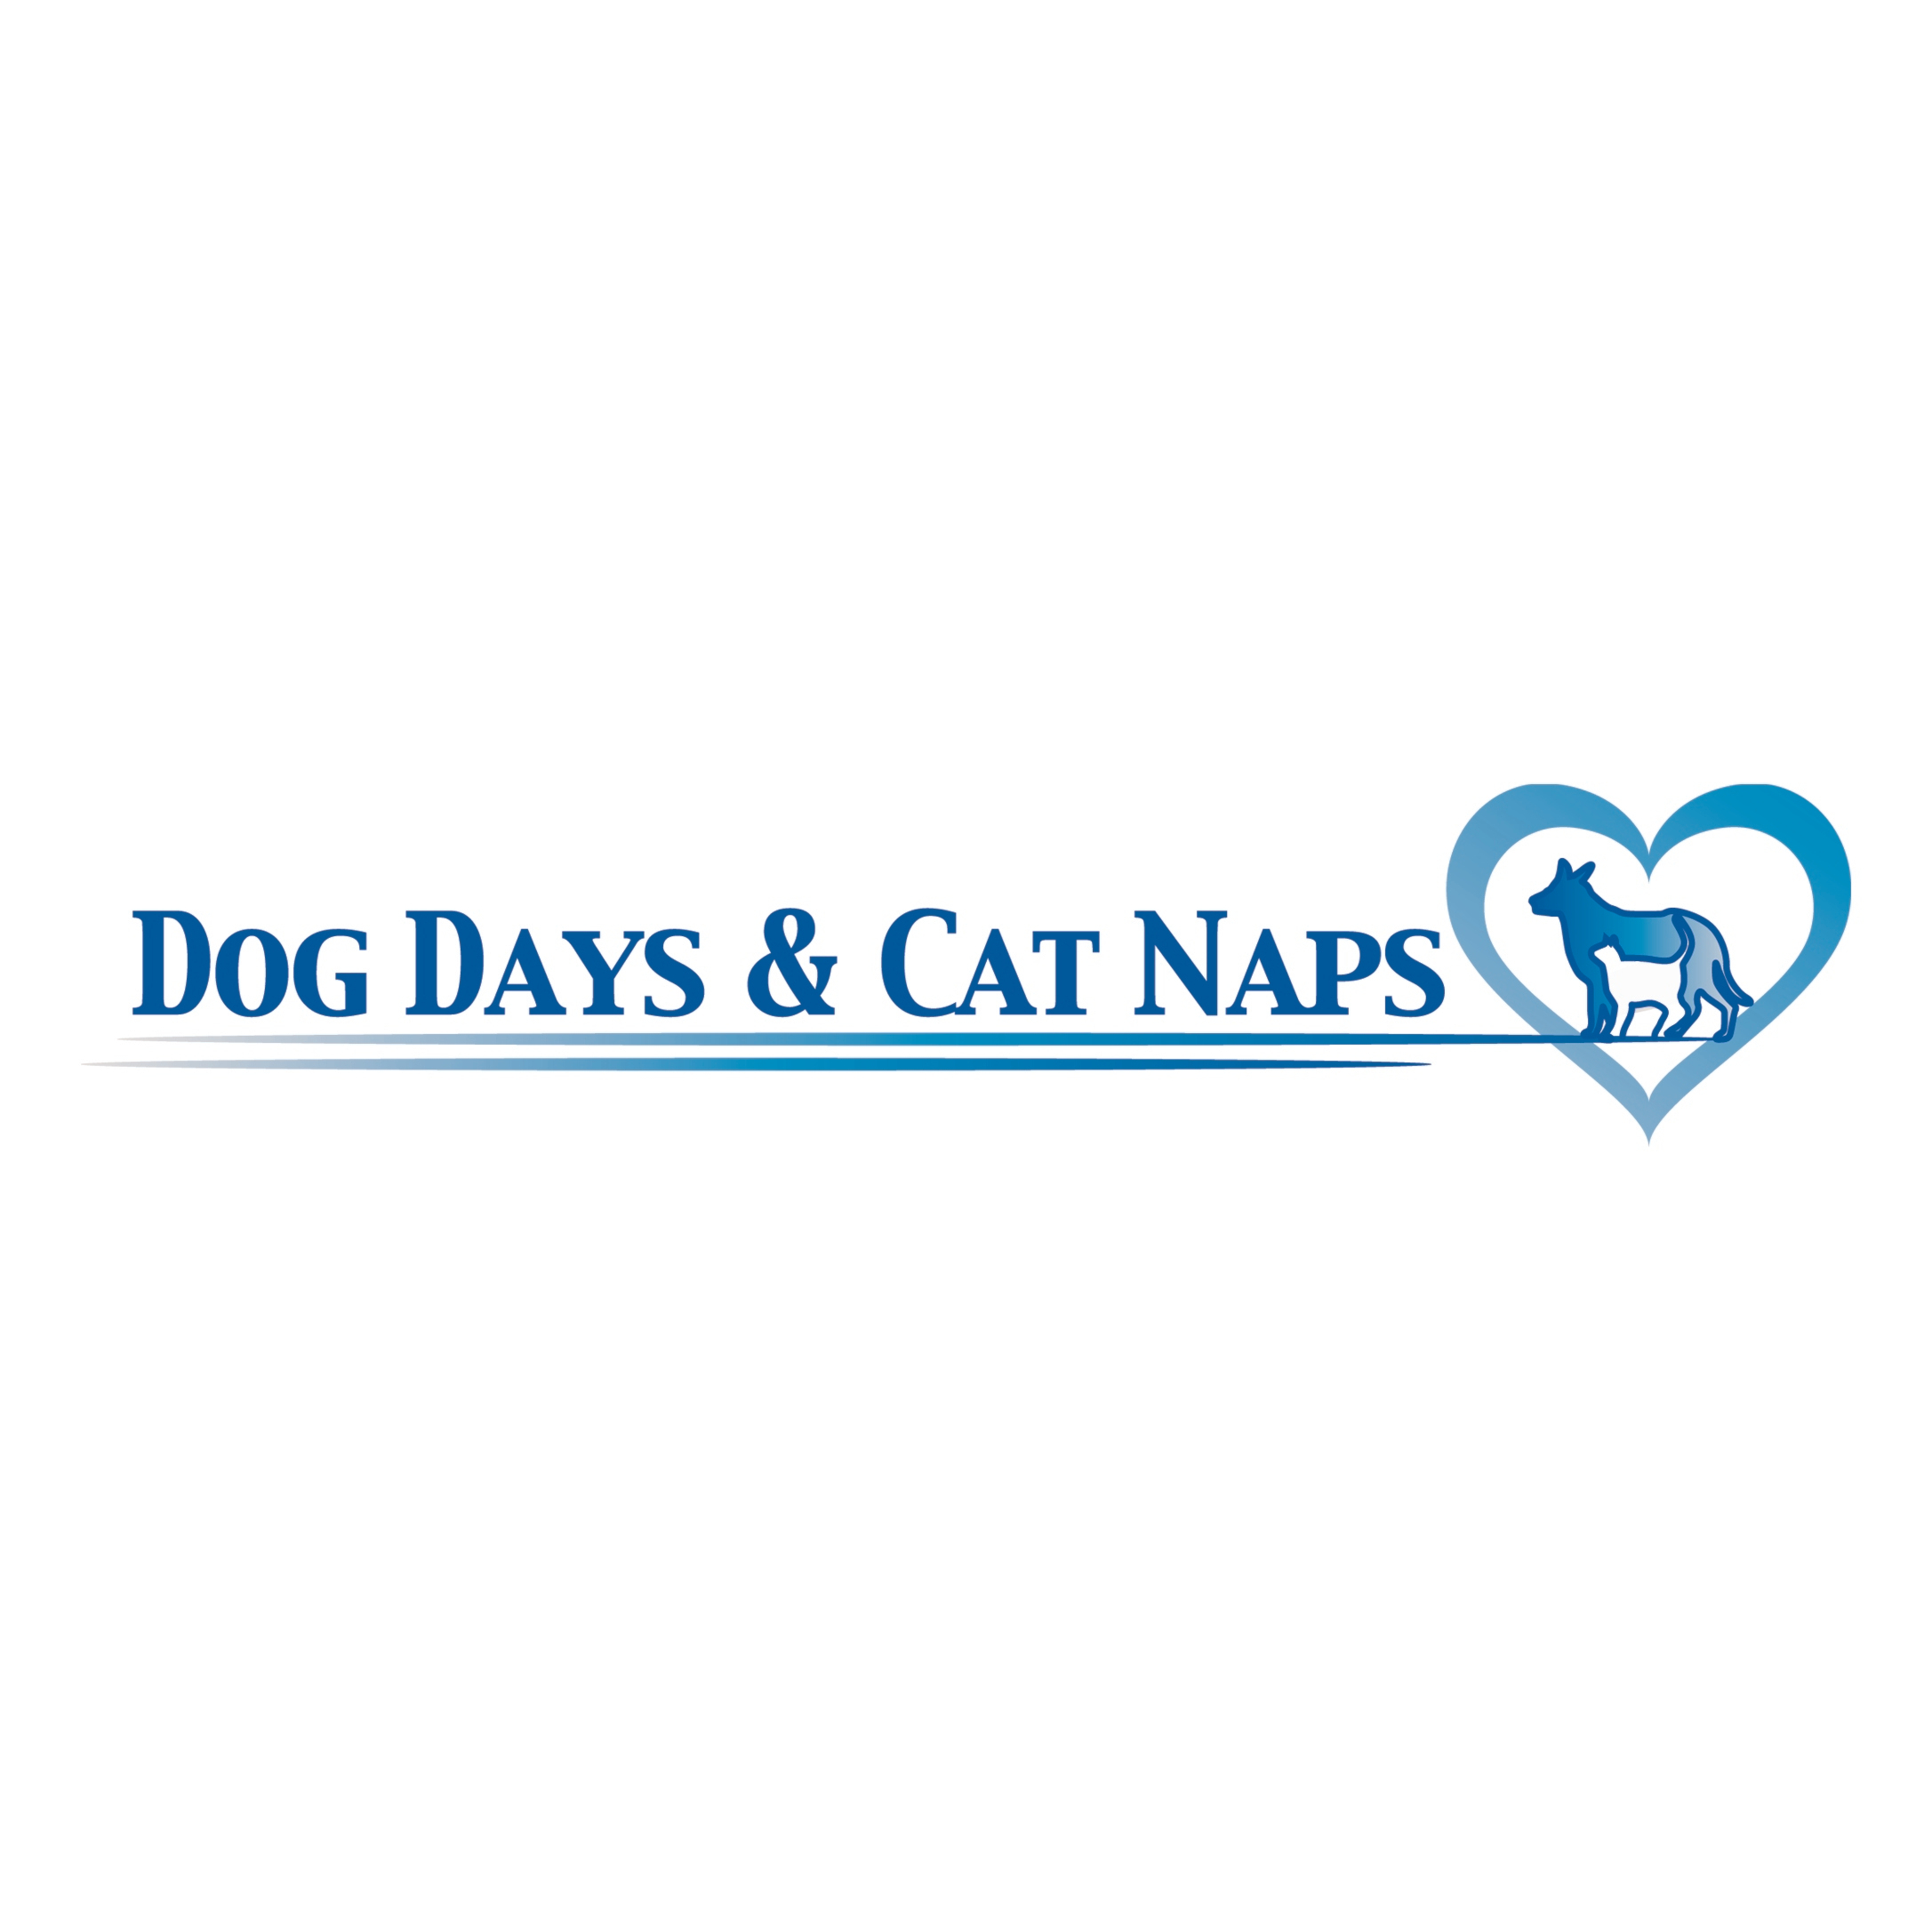 Dog Days & Cat Naps